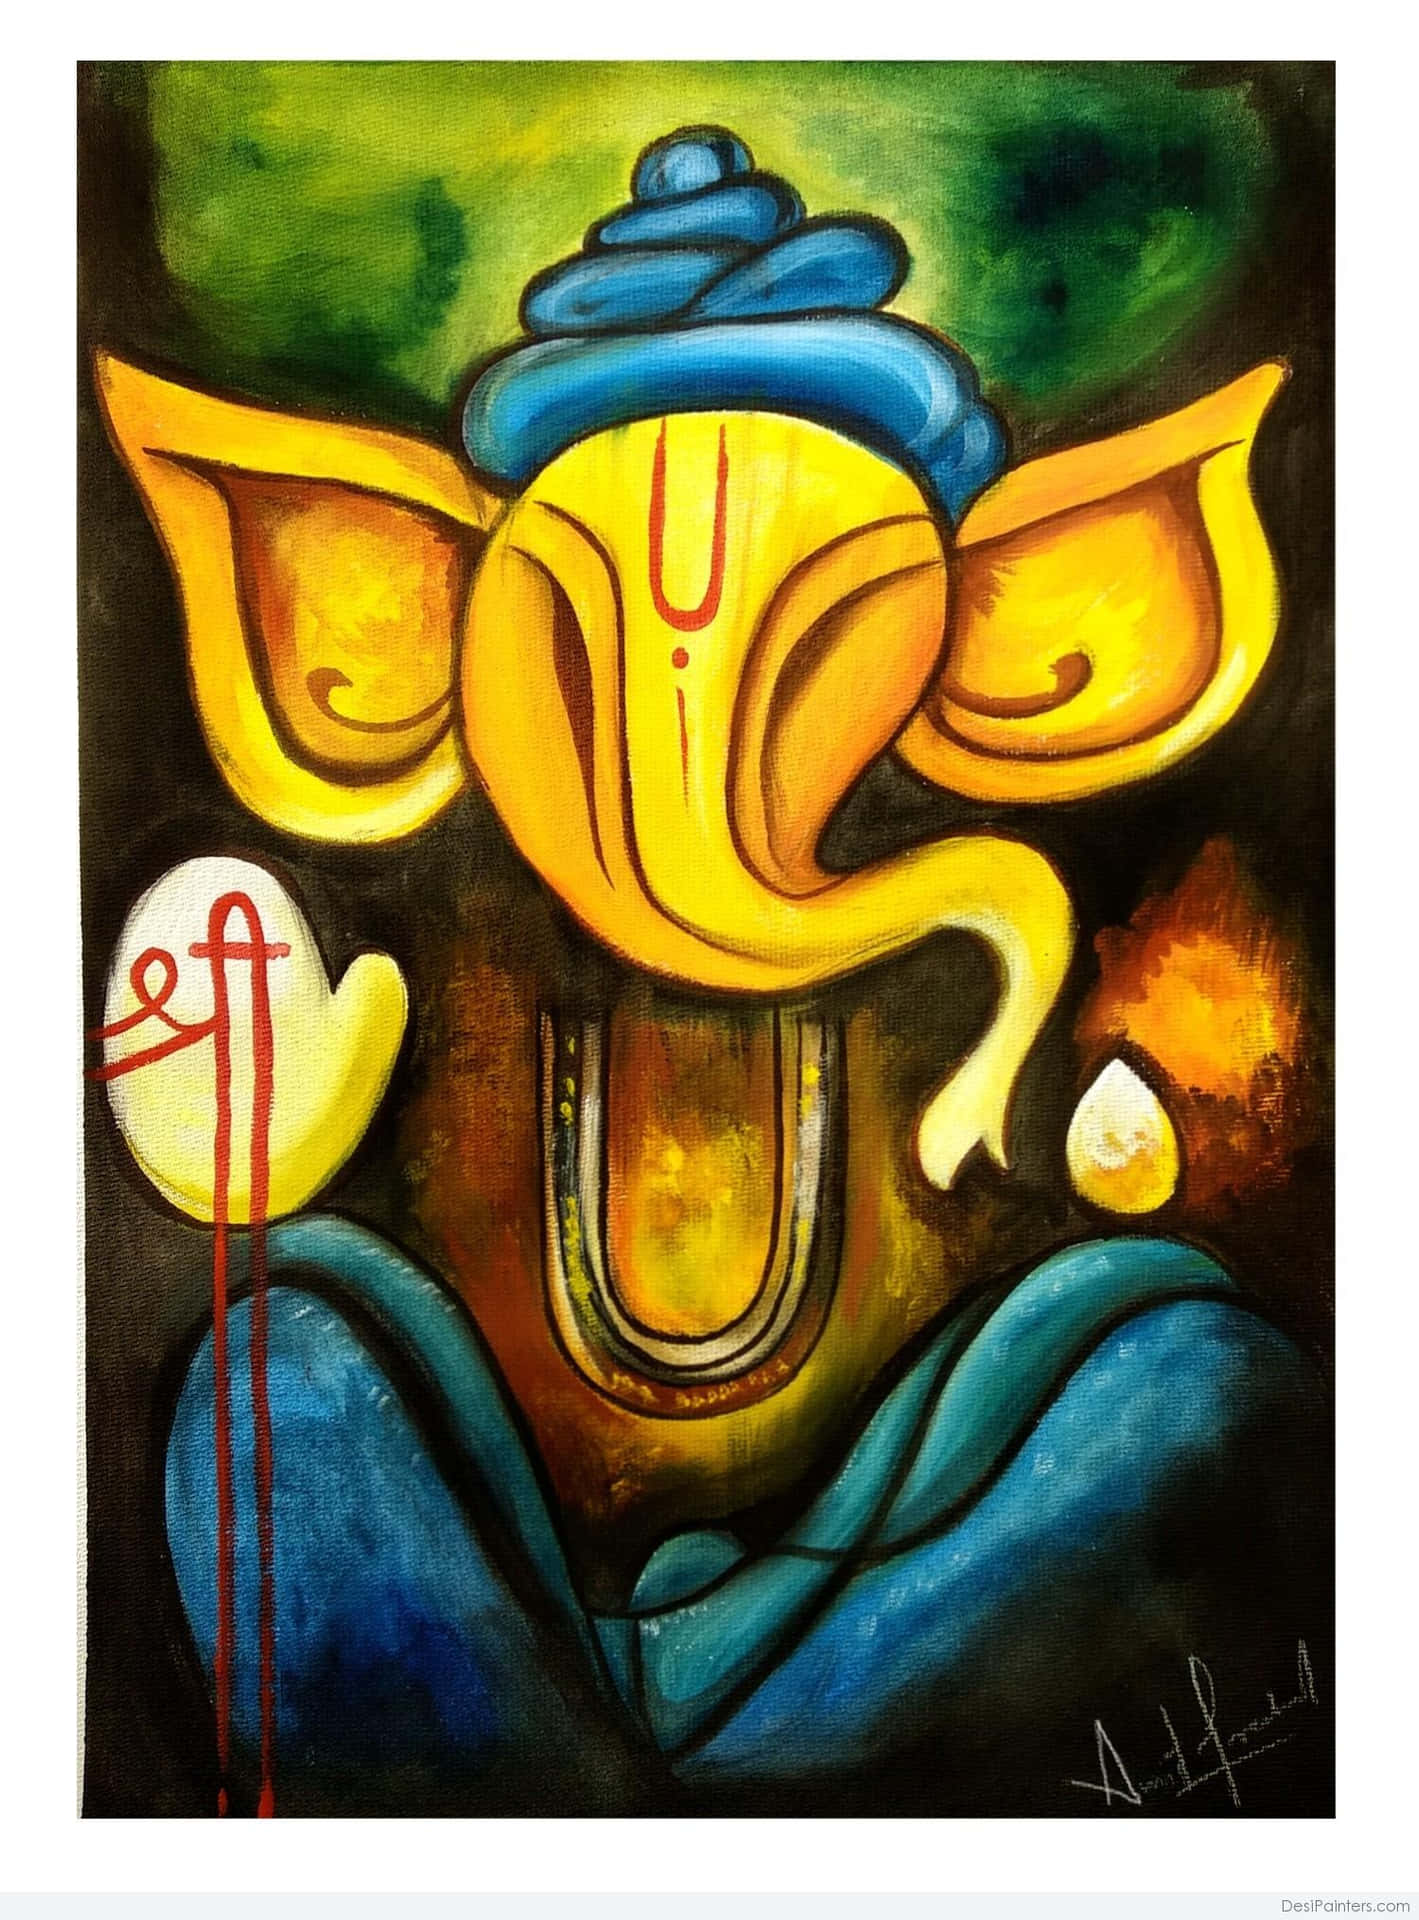 The majestic Hindu god Ganesha